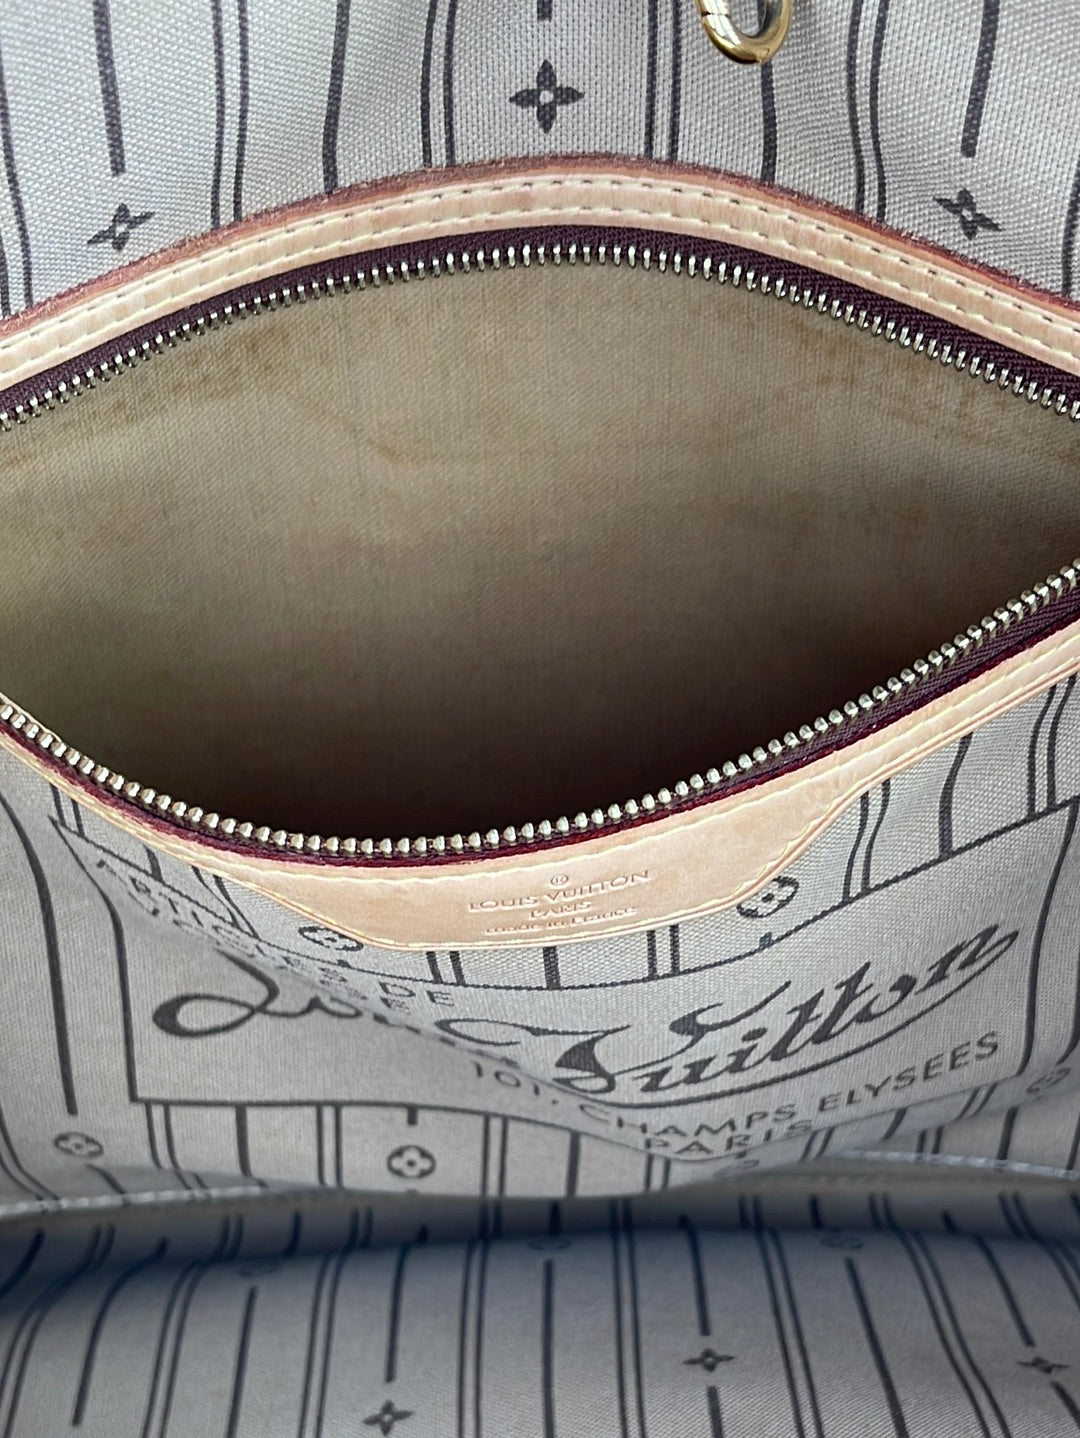 Giftable Preloved Louis Vuitton Monogram Neverfull mm Tote Bag (Tan interior) SP2008 091323